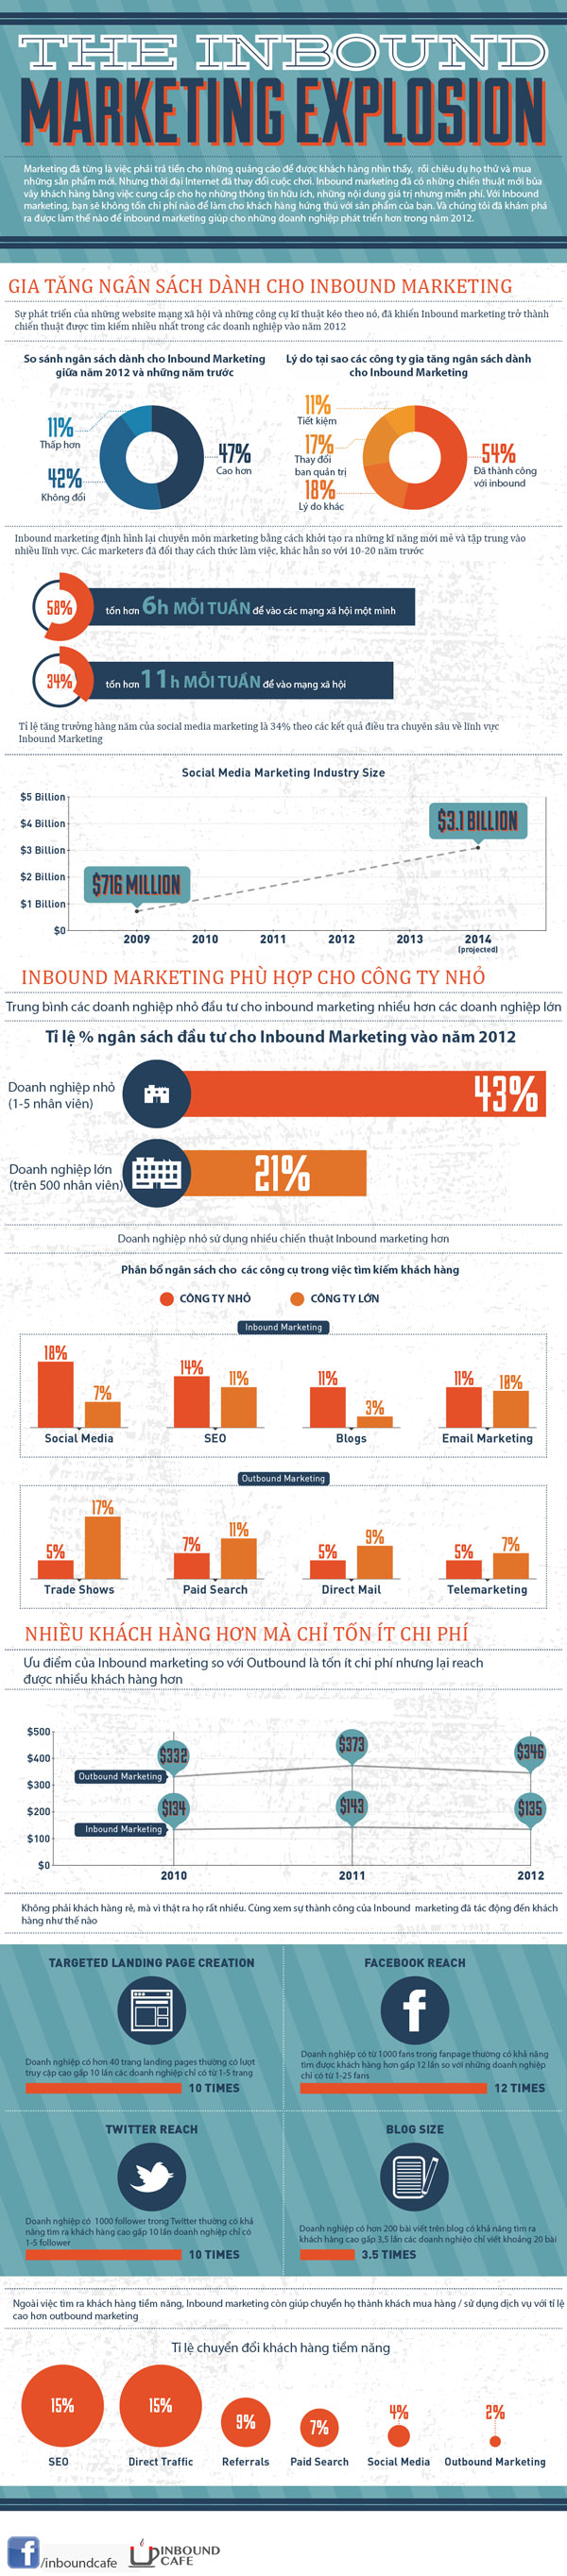 the-inbound-marketing-explosion-infographic-pamorama